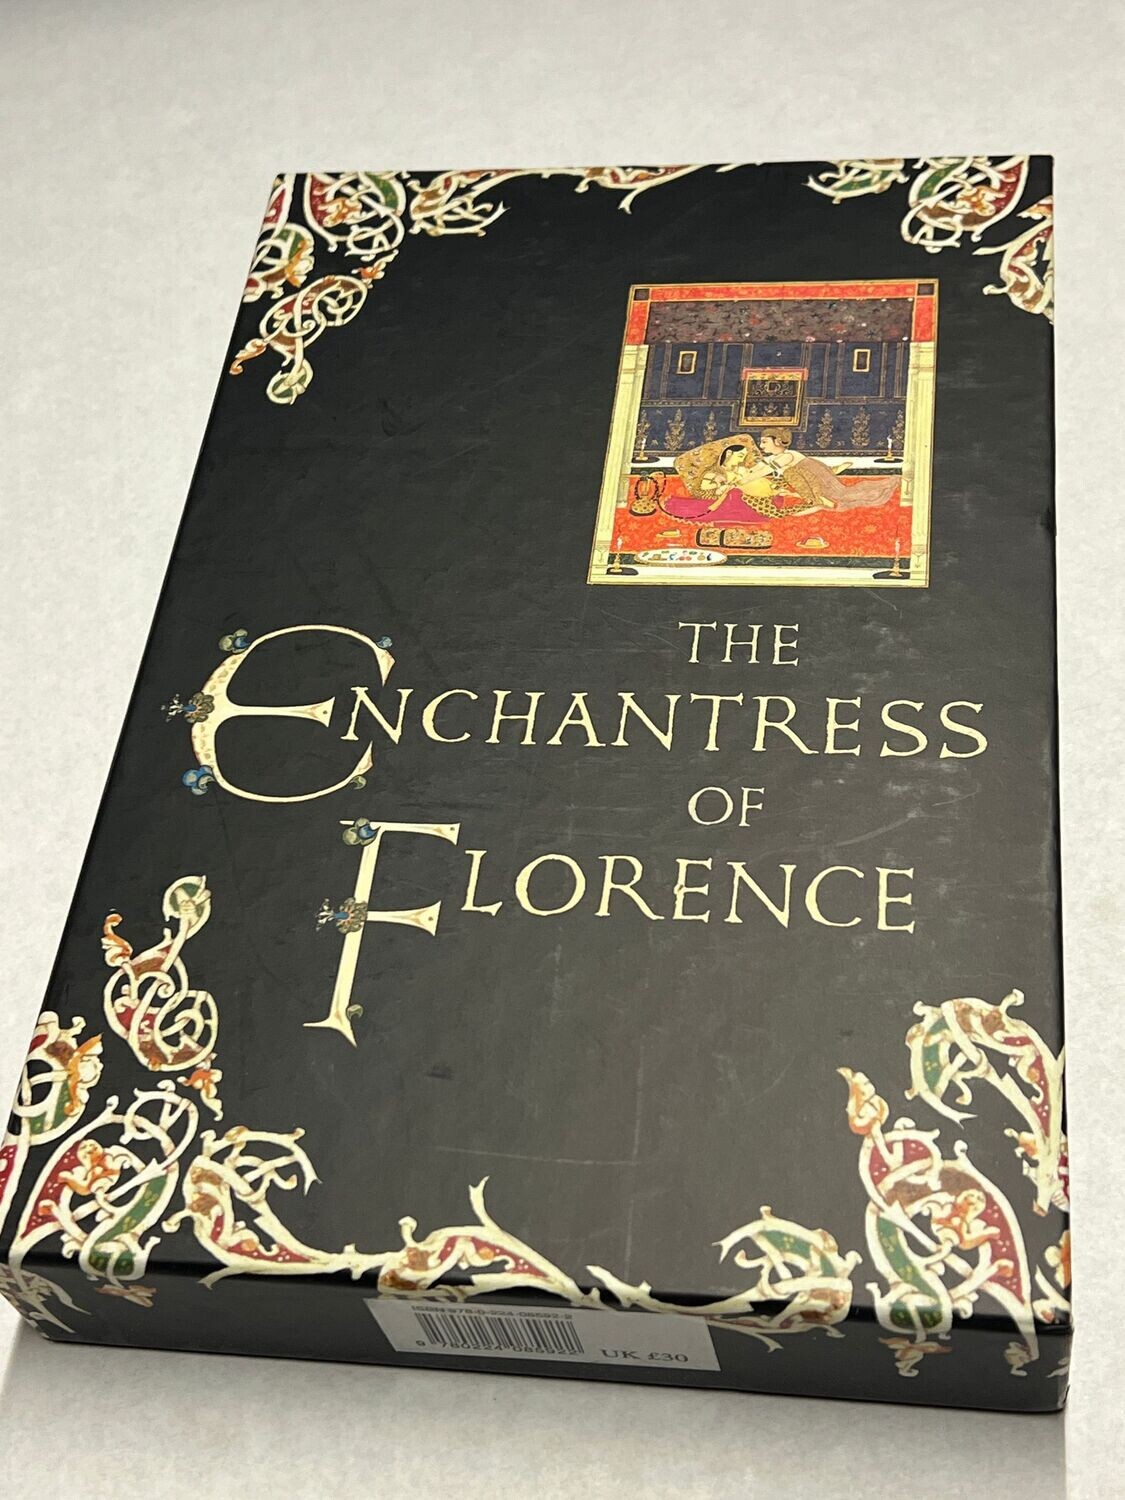 The Enchantress of Florence, Salman Rushdie